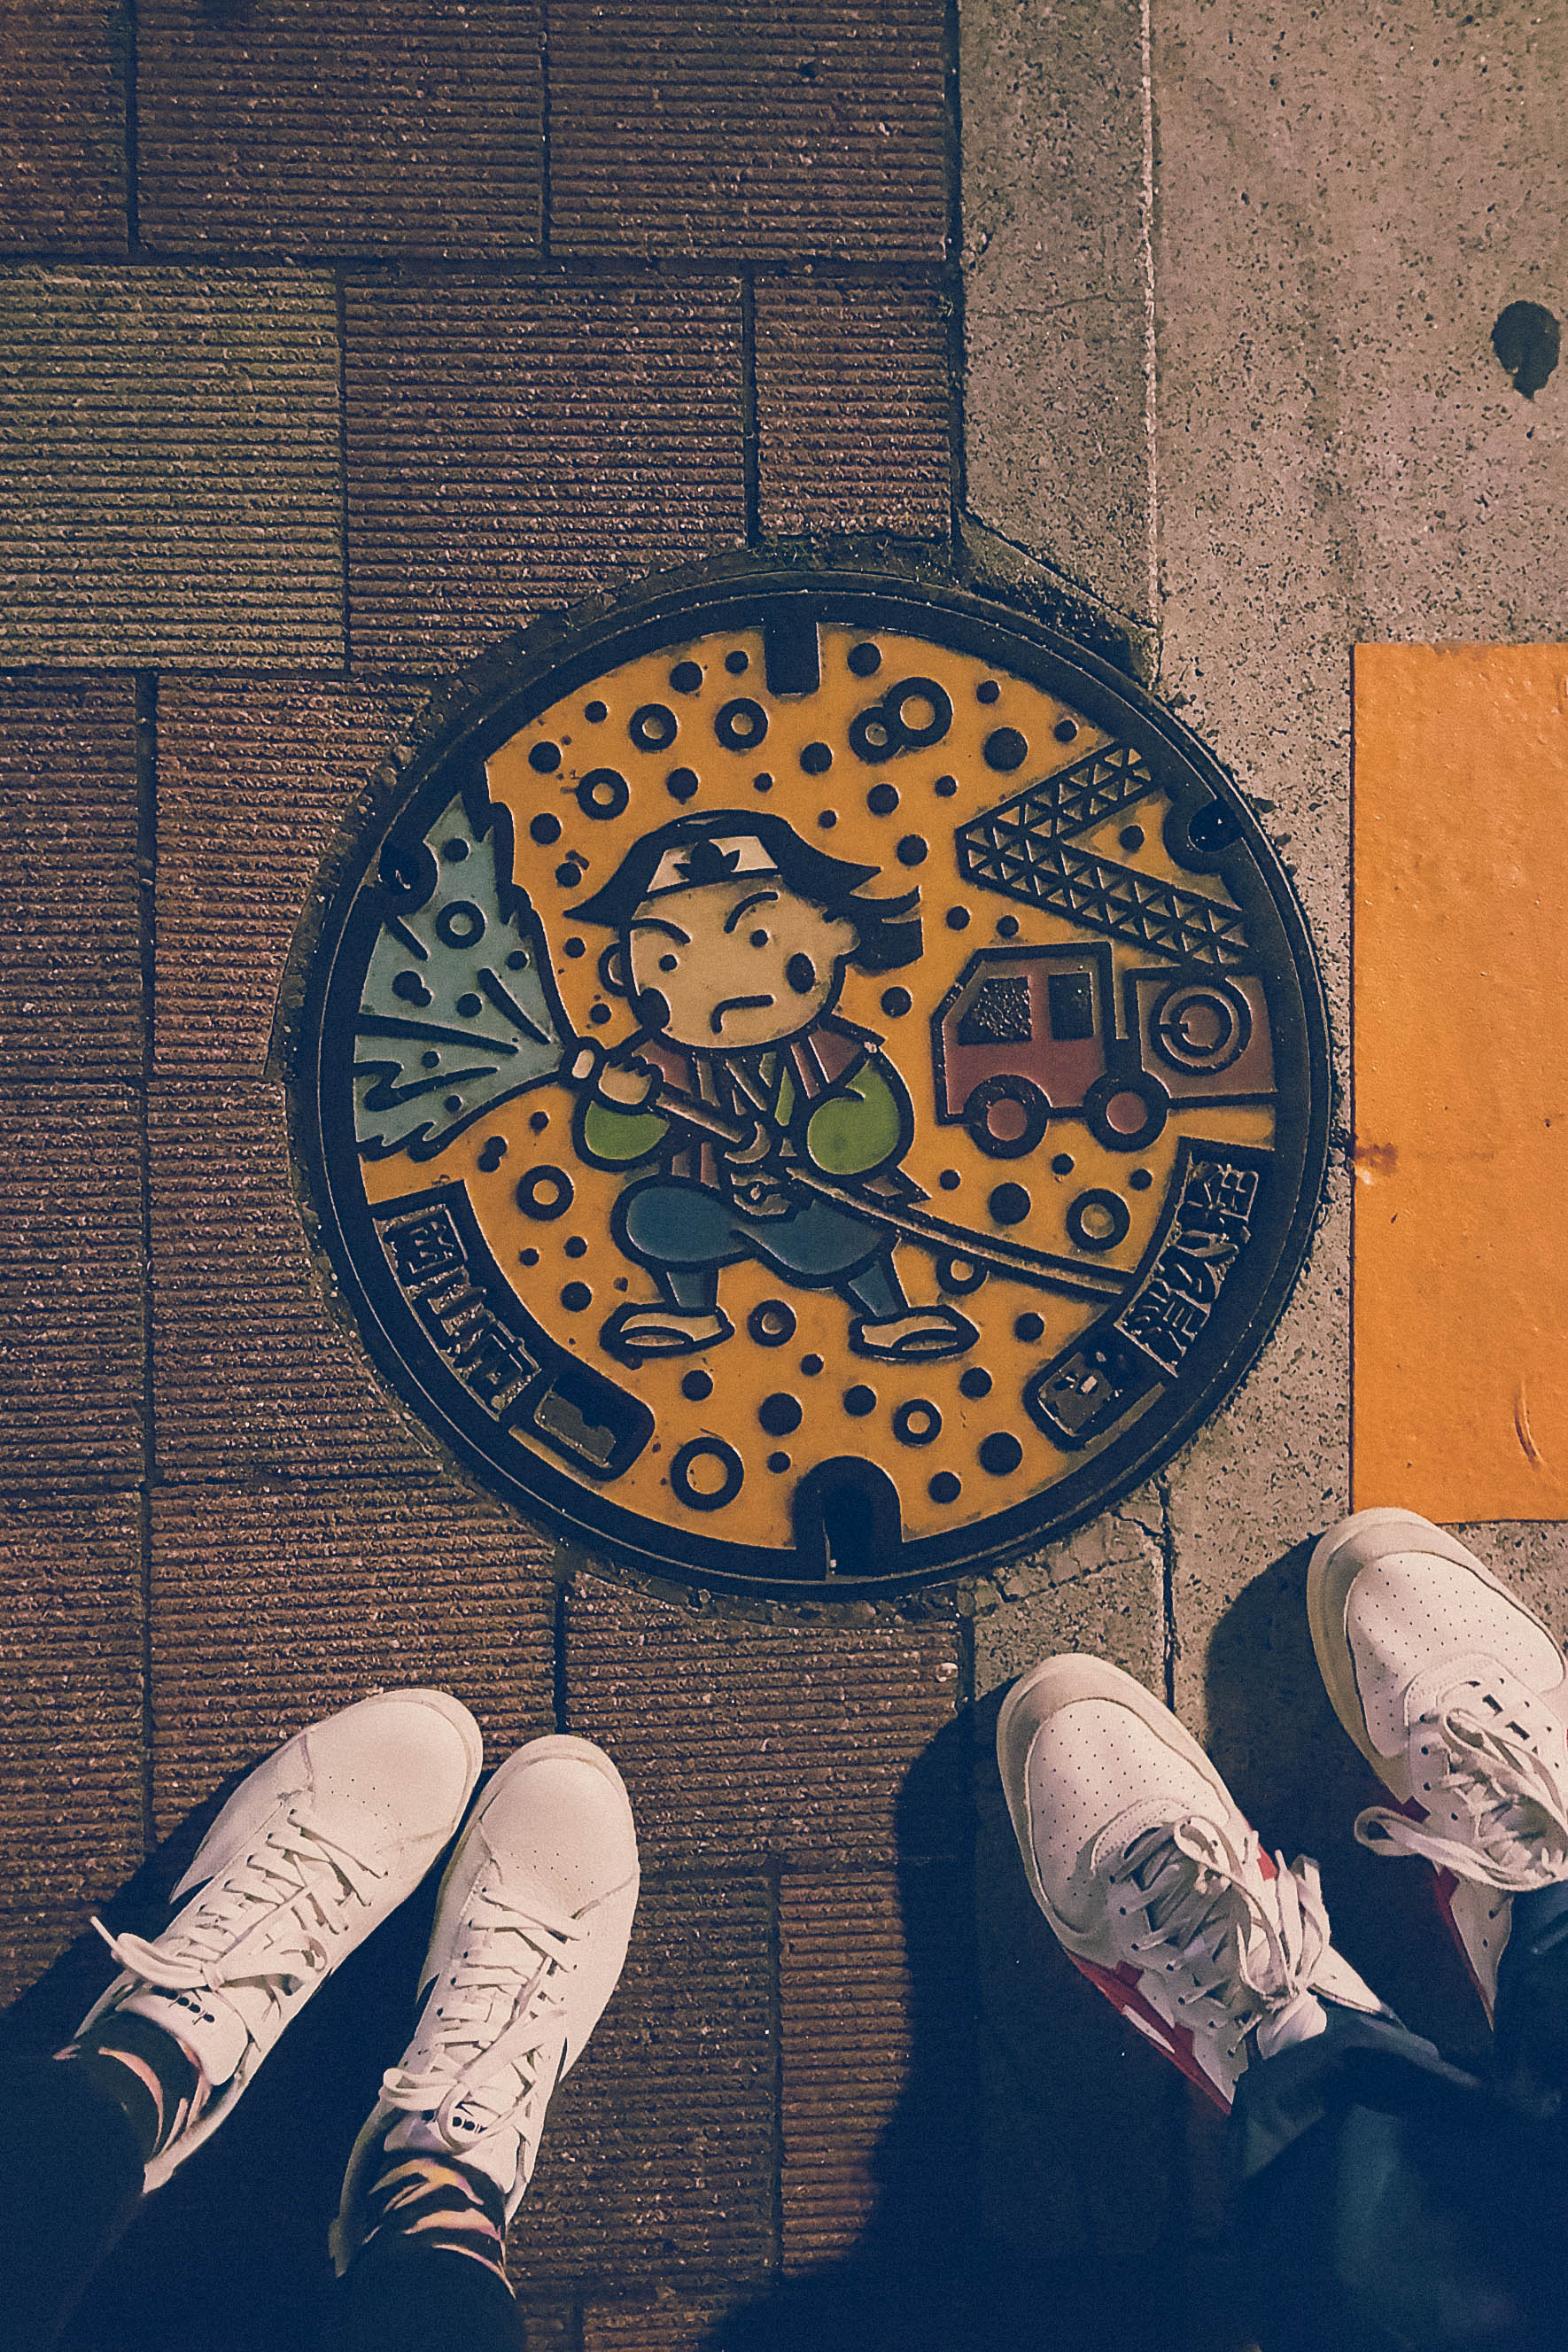 Manhole cover in Okayama